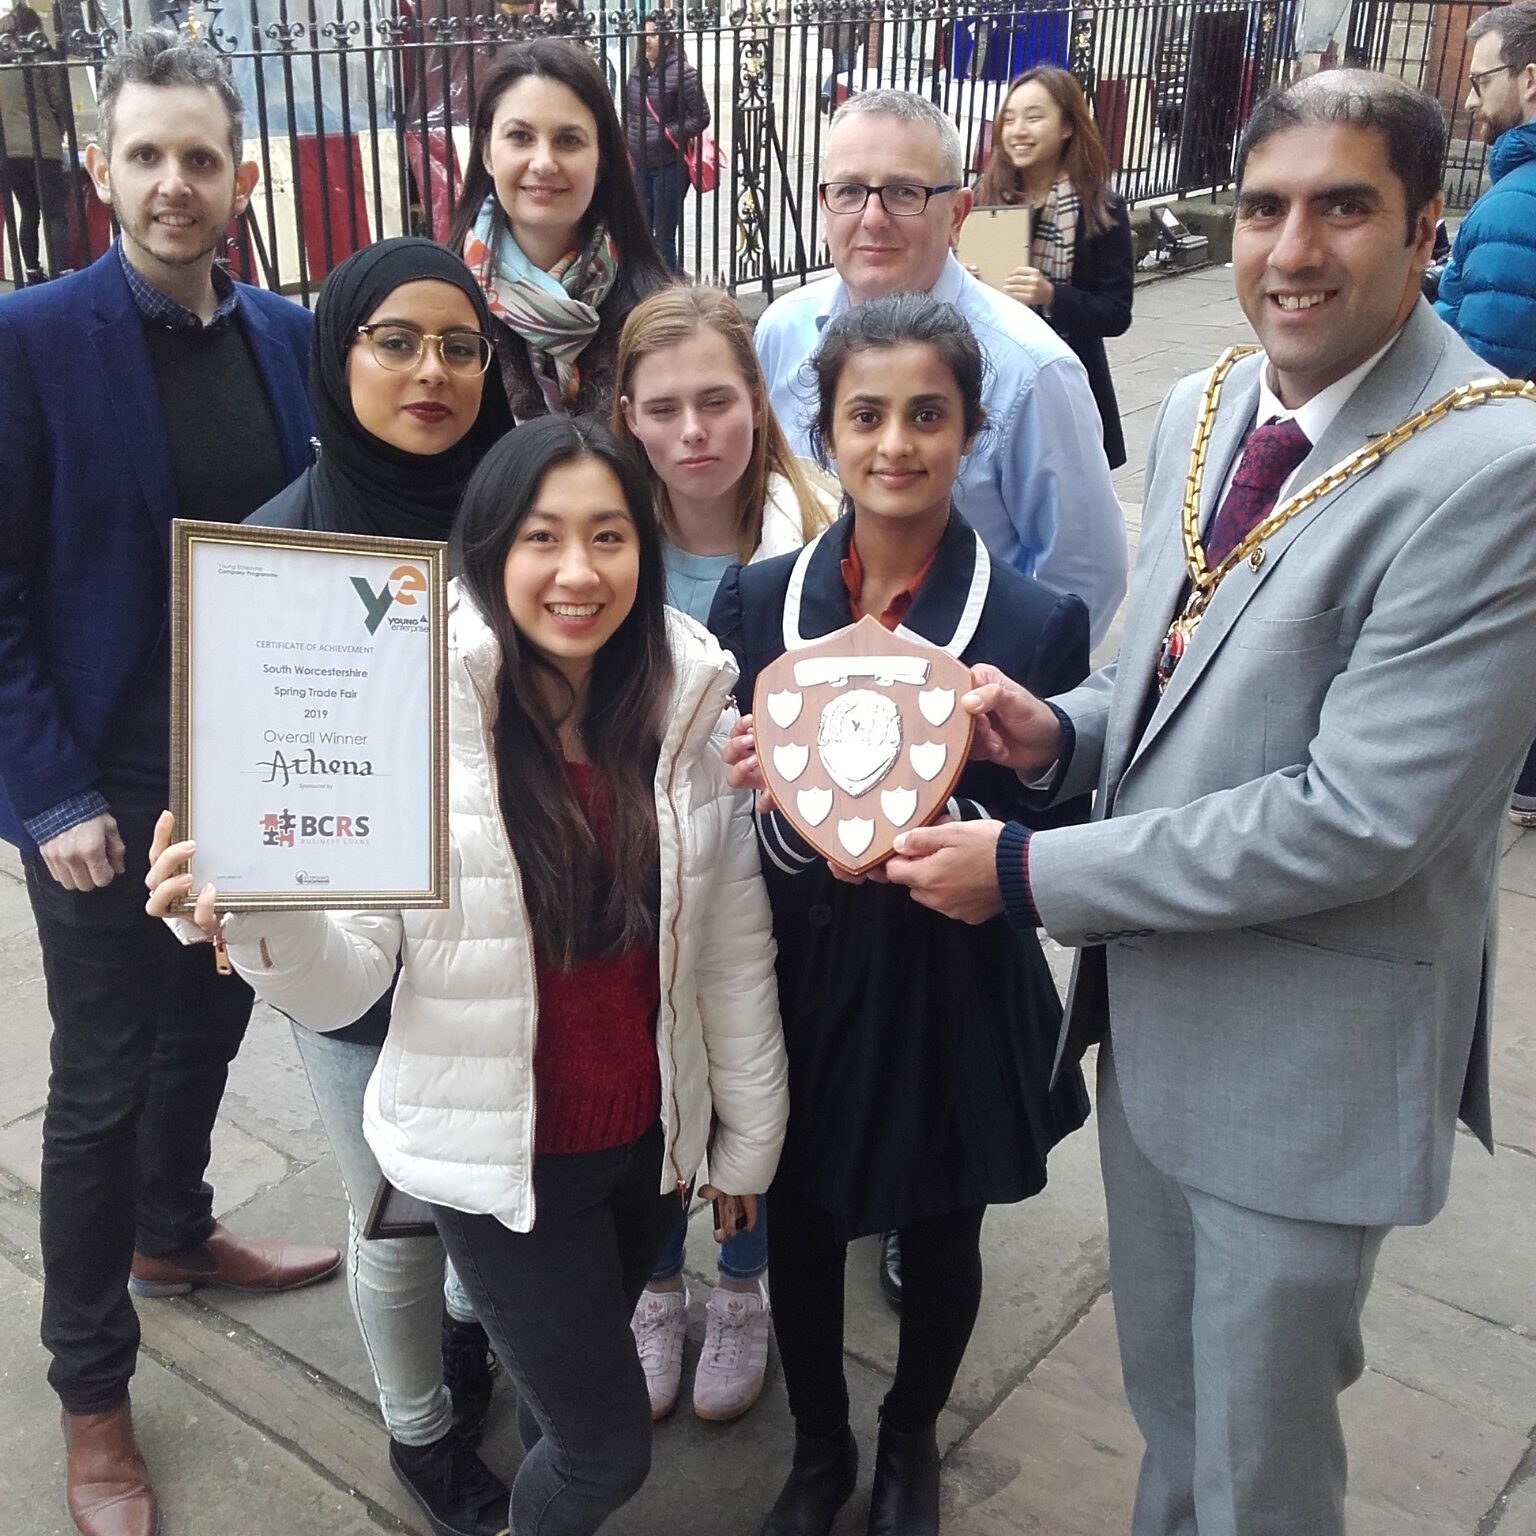 Young Enterprise team receive award from Mayor at Spring Trade Fair